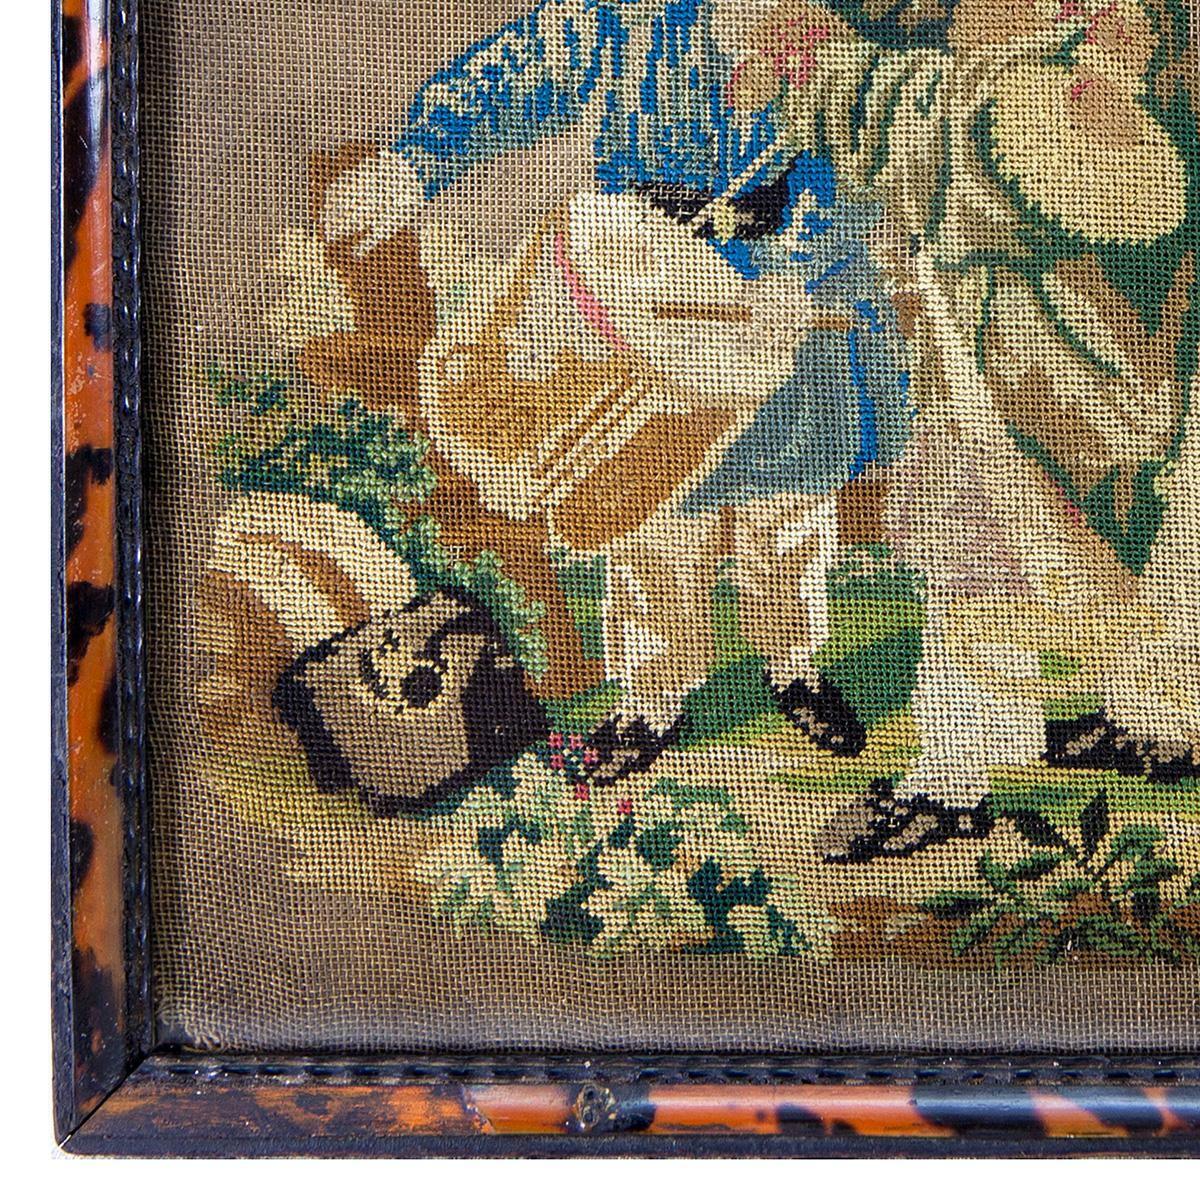 Antique Petitpoint Needlepoint Tapestry Sampler, Boys Playing Soldier Rare Tortoise Shell Frame